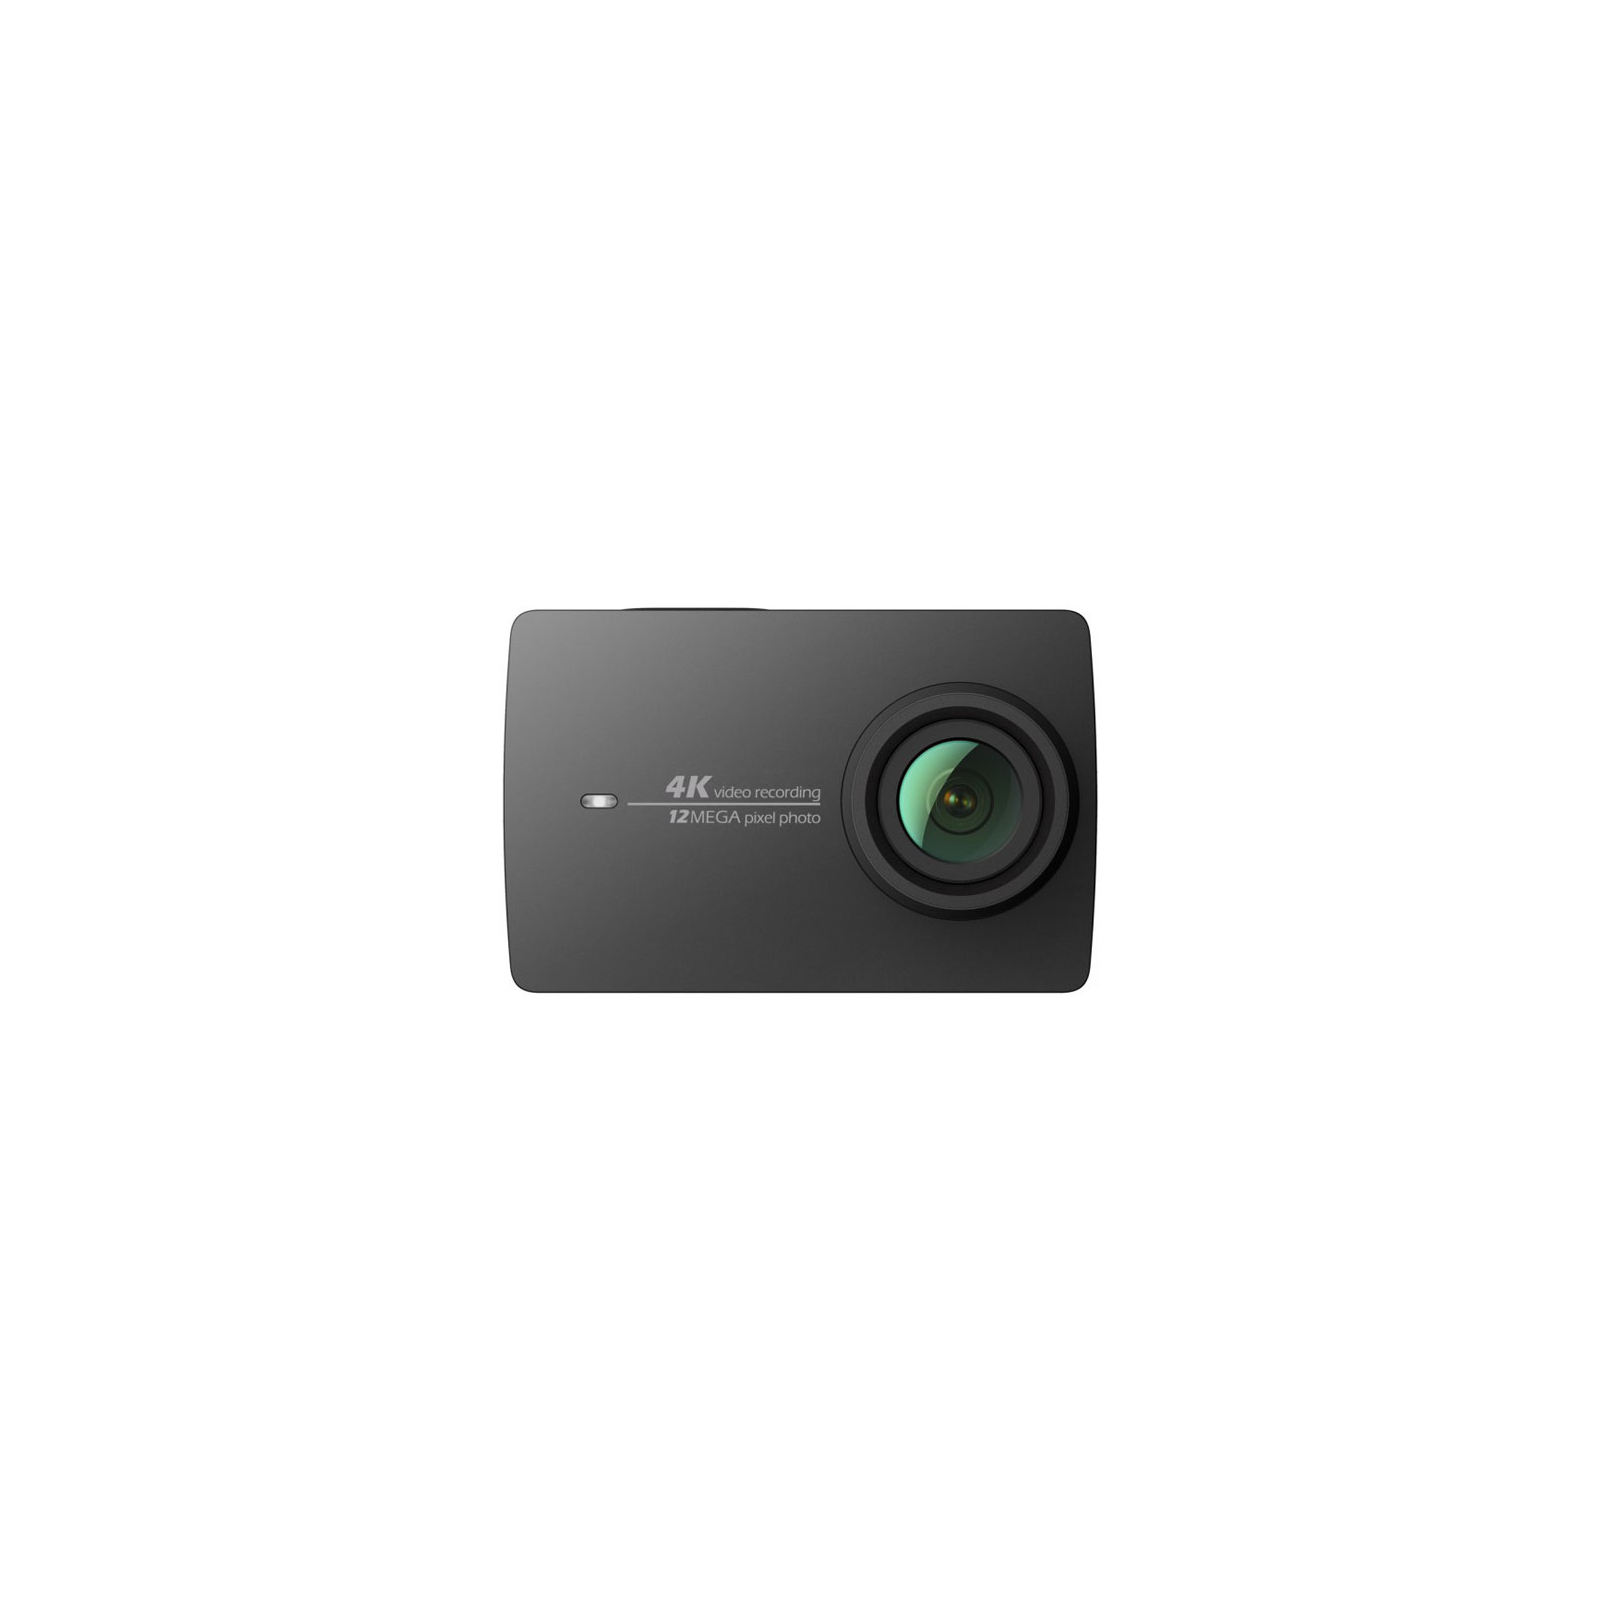 Экшн-камера Xiaomi Yi 4K Black Travel International Edition+ Remote control (YI-90008)